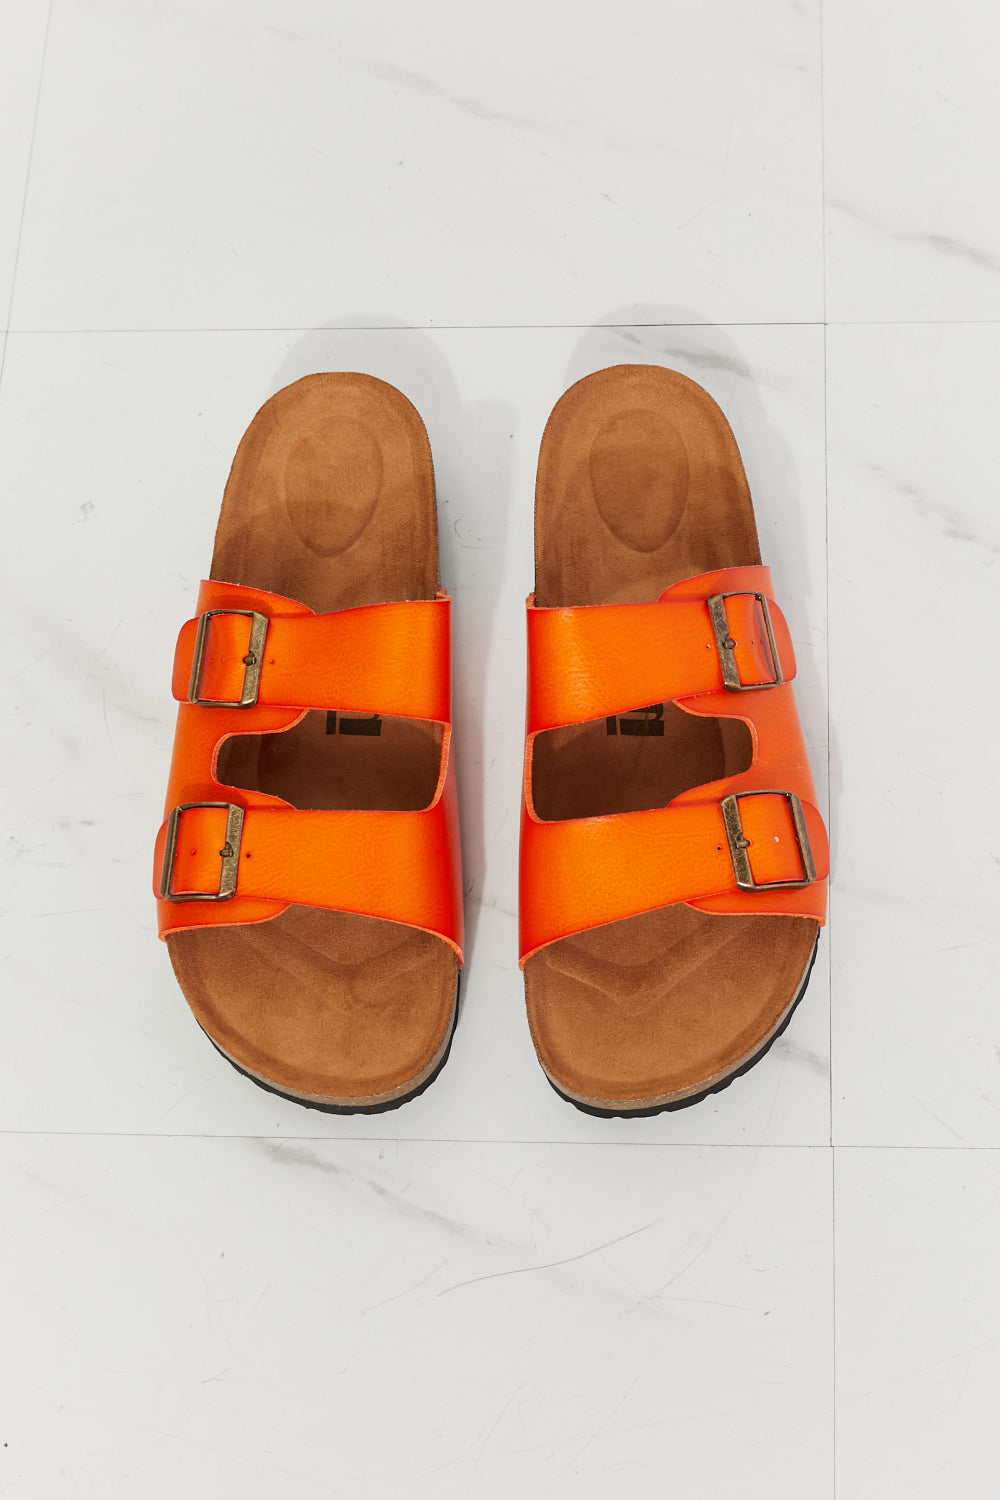 MMShoes Feeling Alive Double Banded Slide Sandals in Orange  Southern Soul Collectives 